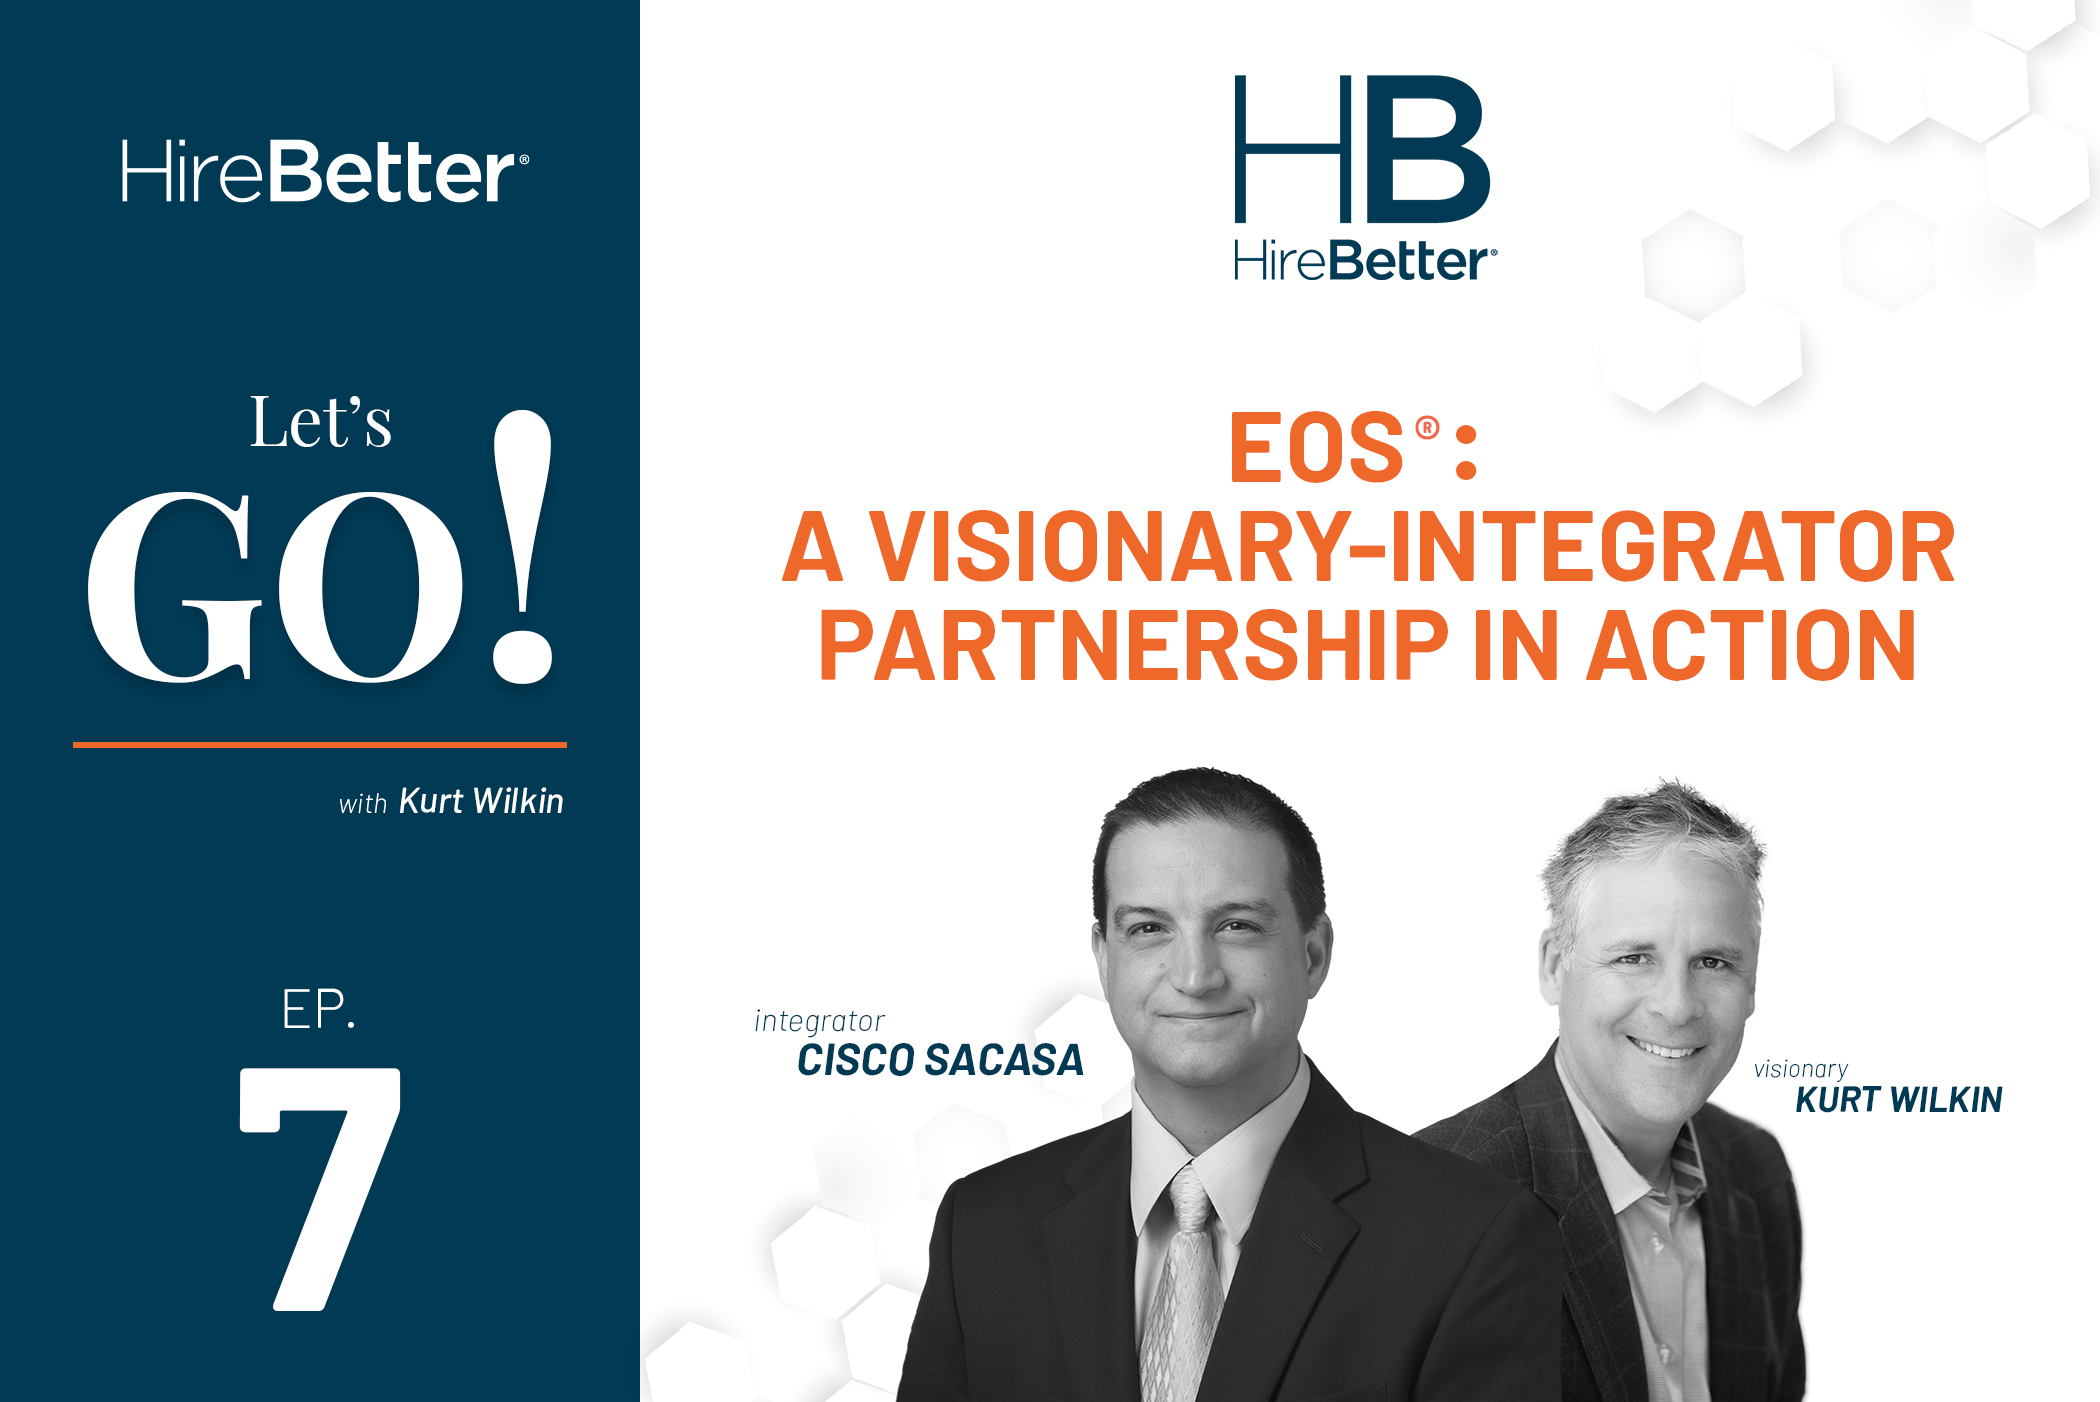 HireBetter Cisco Sacasa and Kurt Wilkin Video Promo Image - A Visionary-Integrator Partnership in Action